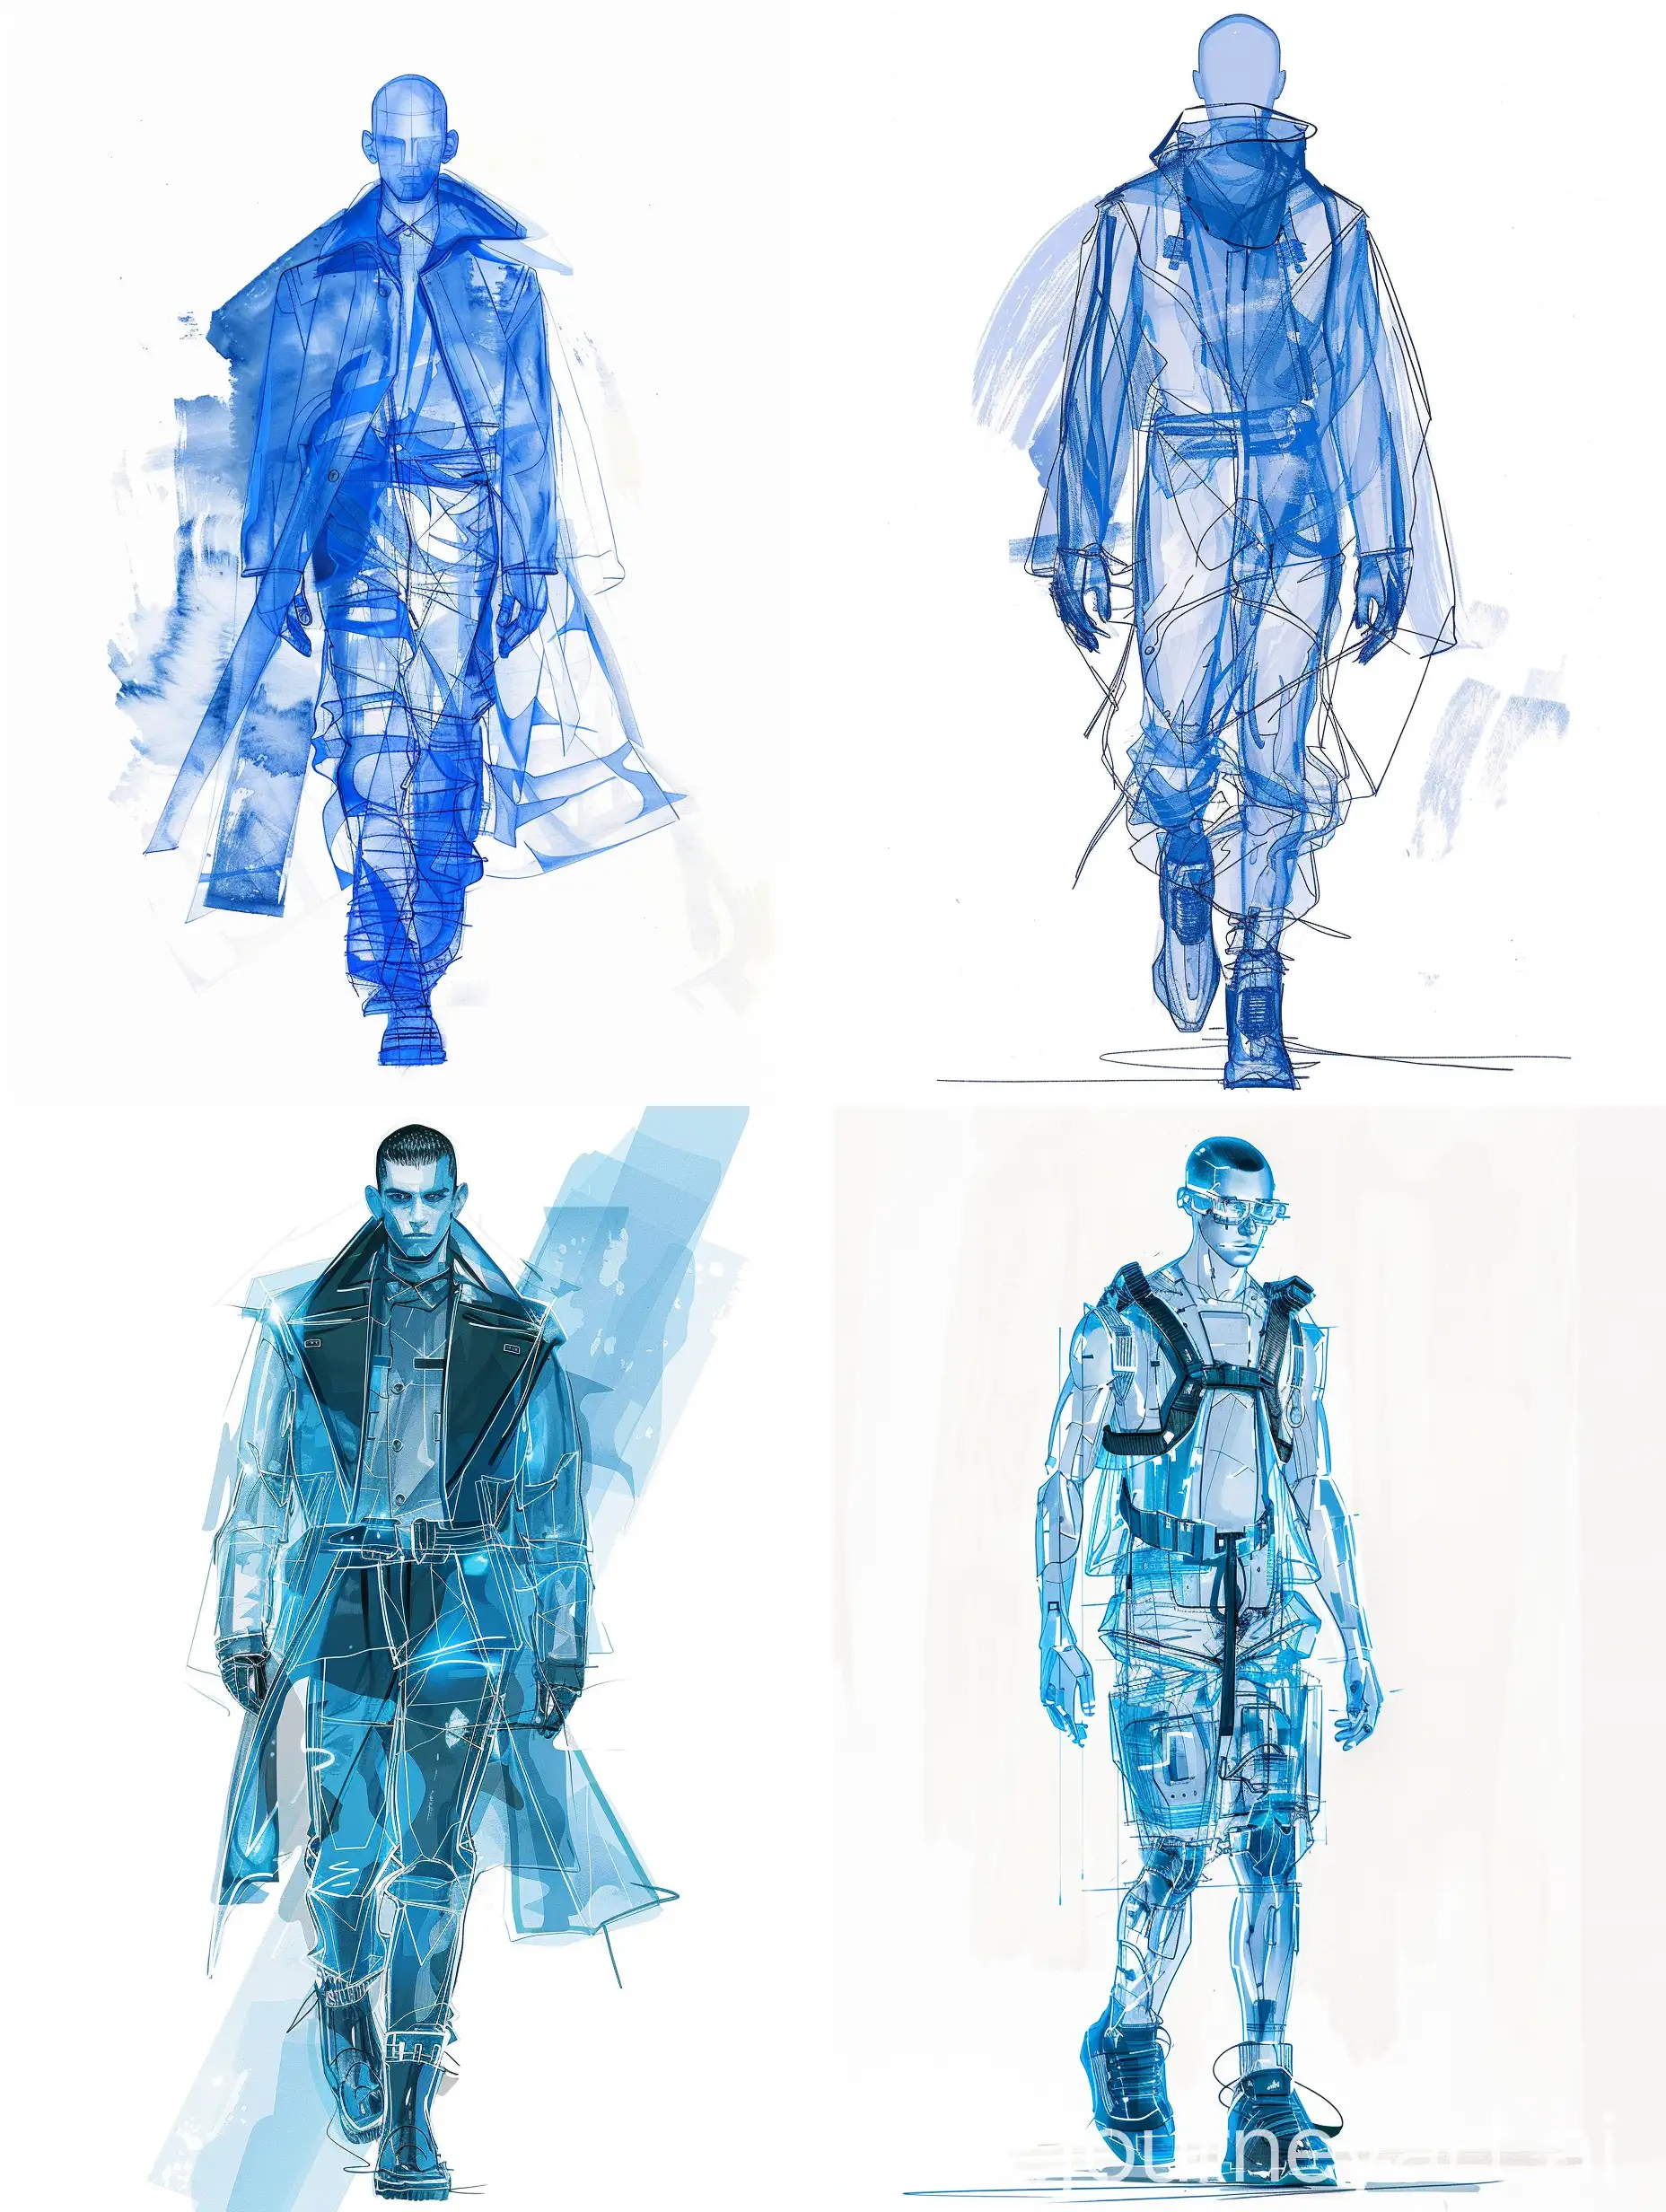 futuristic male transparent blue fashion runway sketches minimalist illustration
